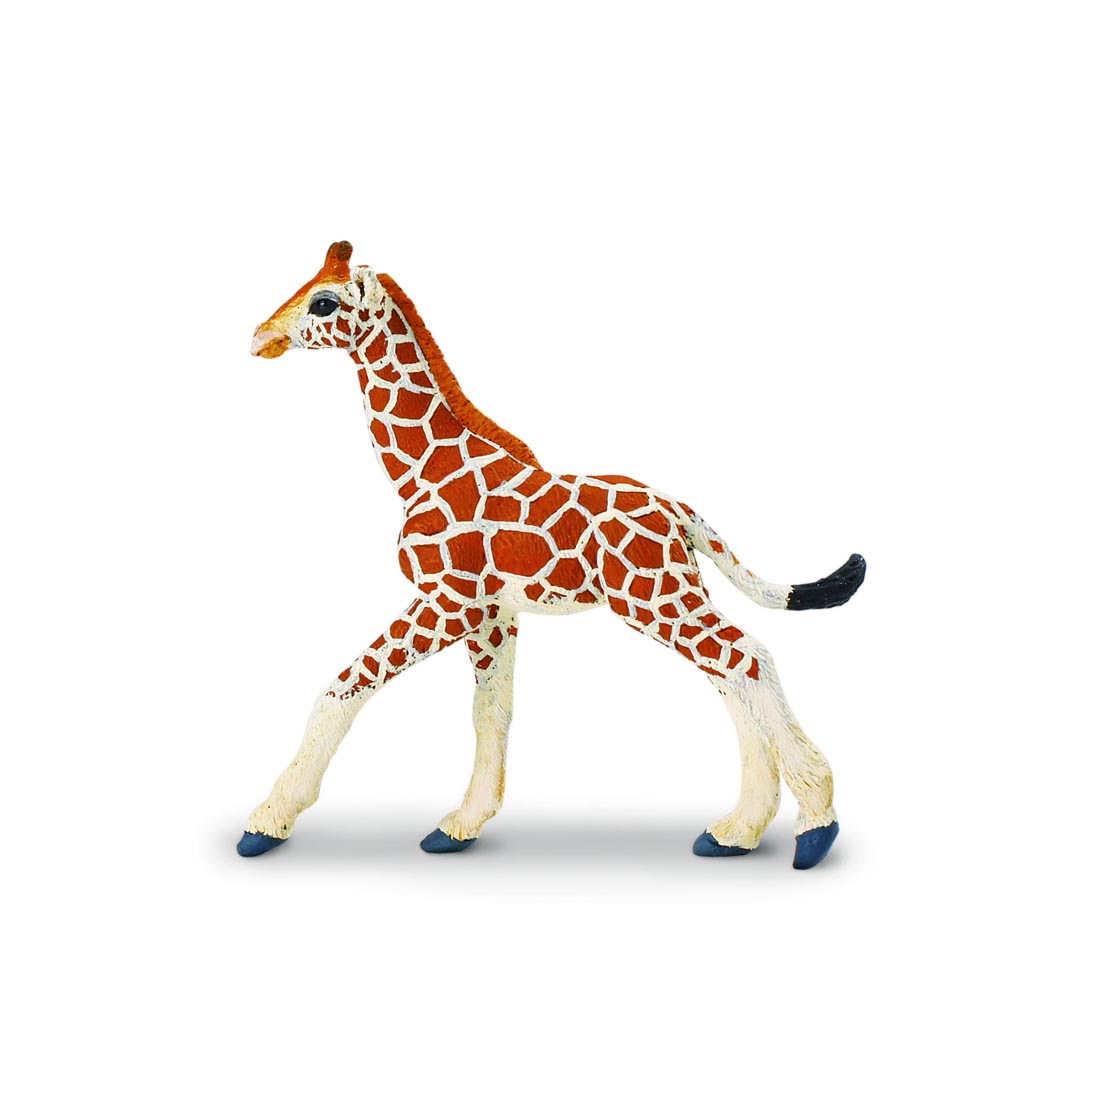 Reticulated Giraffe Baby Figurine